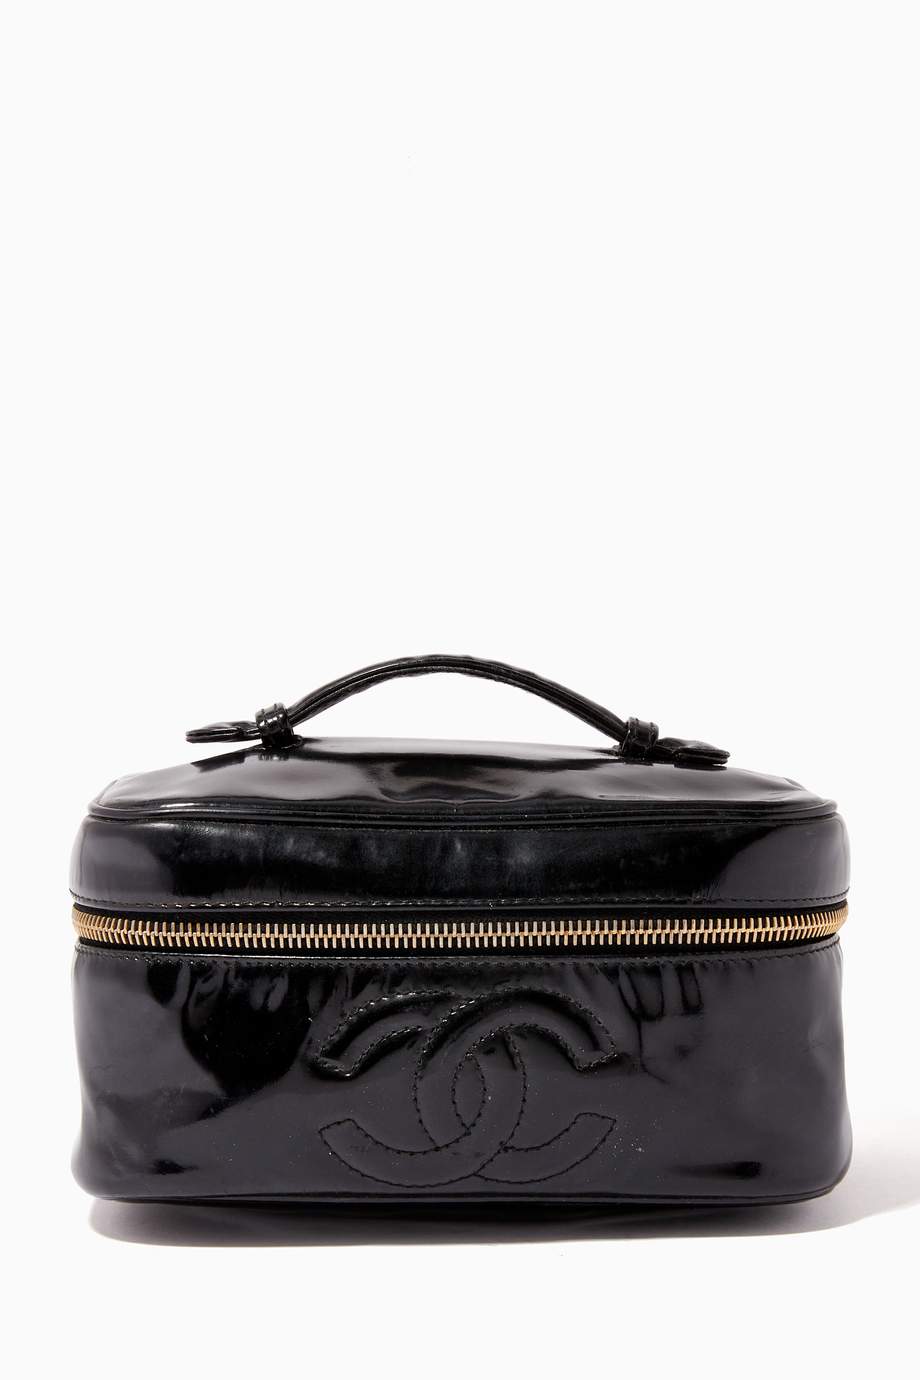 Shop Chanel Vintage Black Vanity Bag in Patent Leather for Women | Ounass UAE